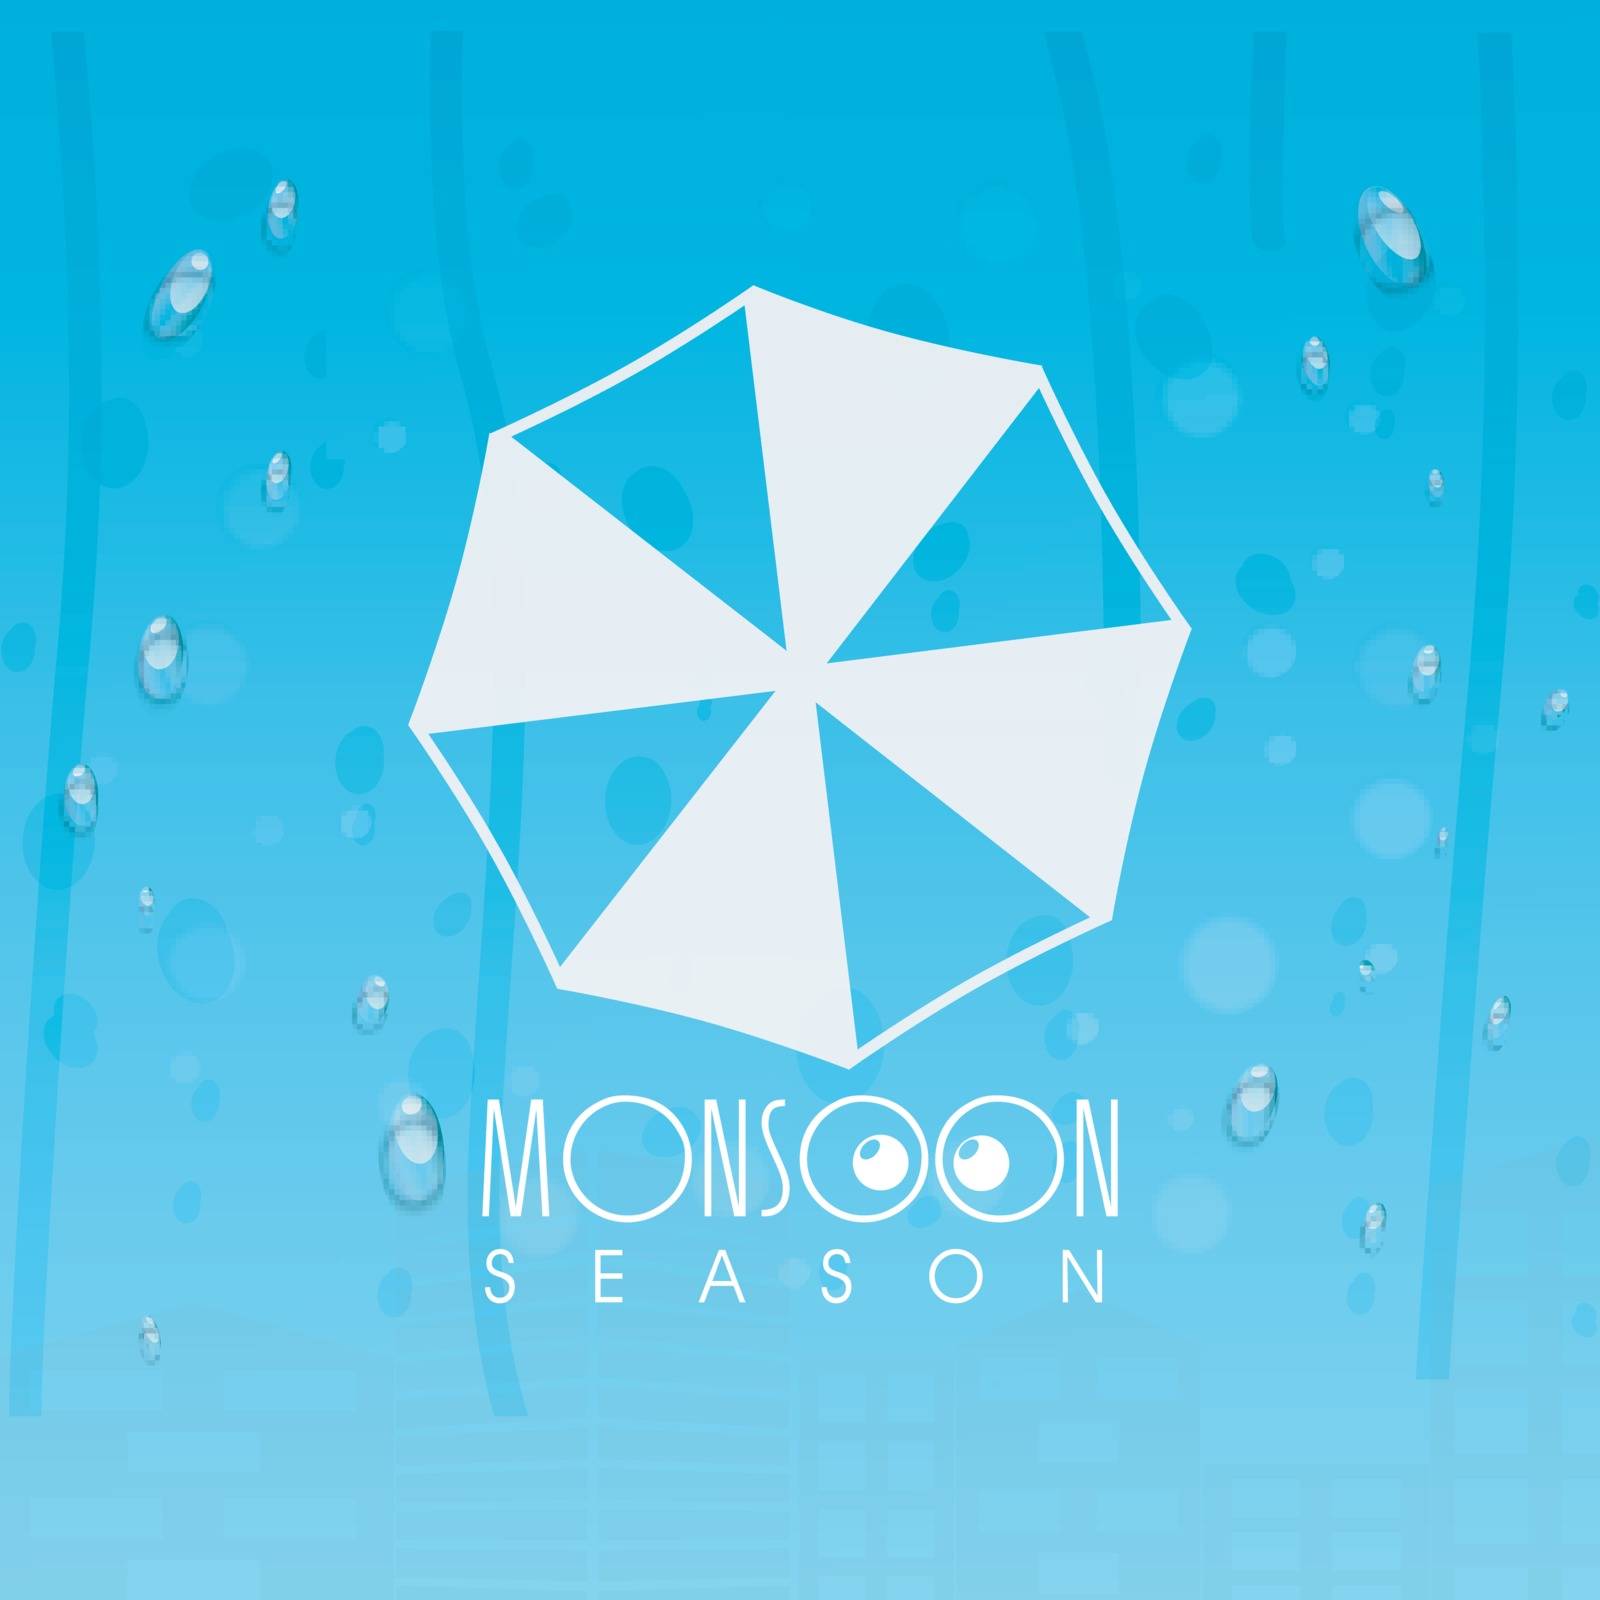 Monsoon Season background with umbrella and rain drops.